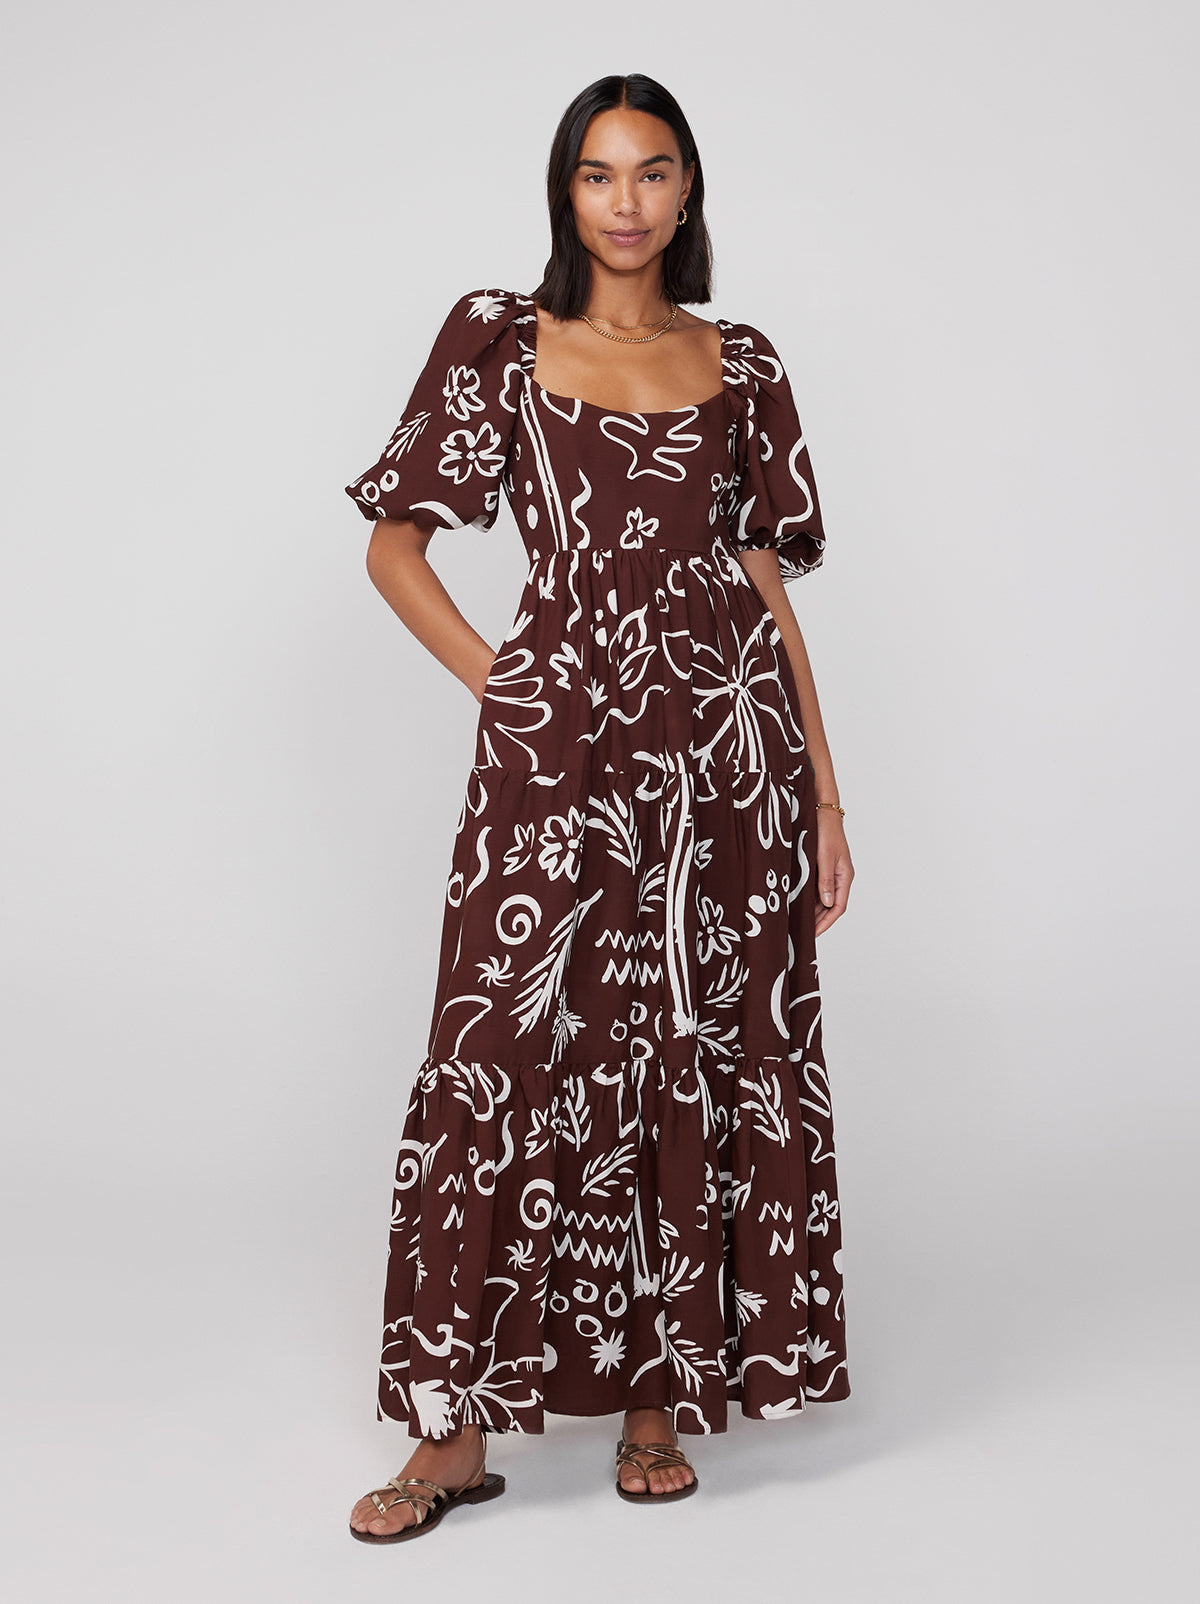 Gianna Coco Palm Print Maxi Dress